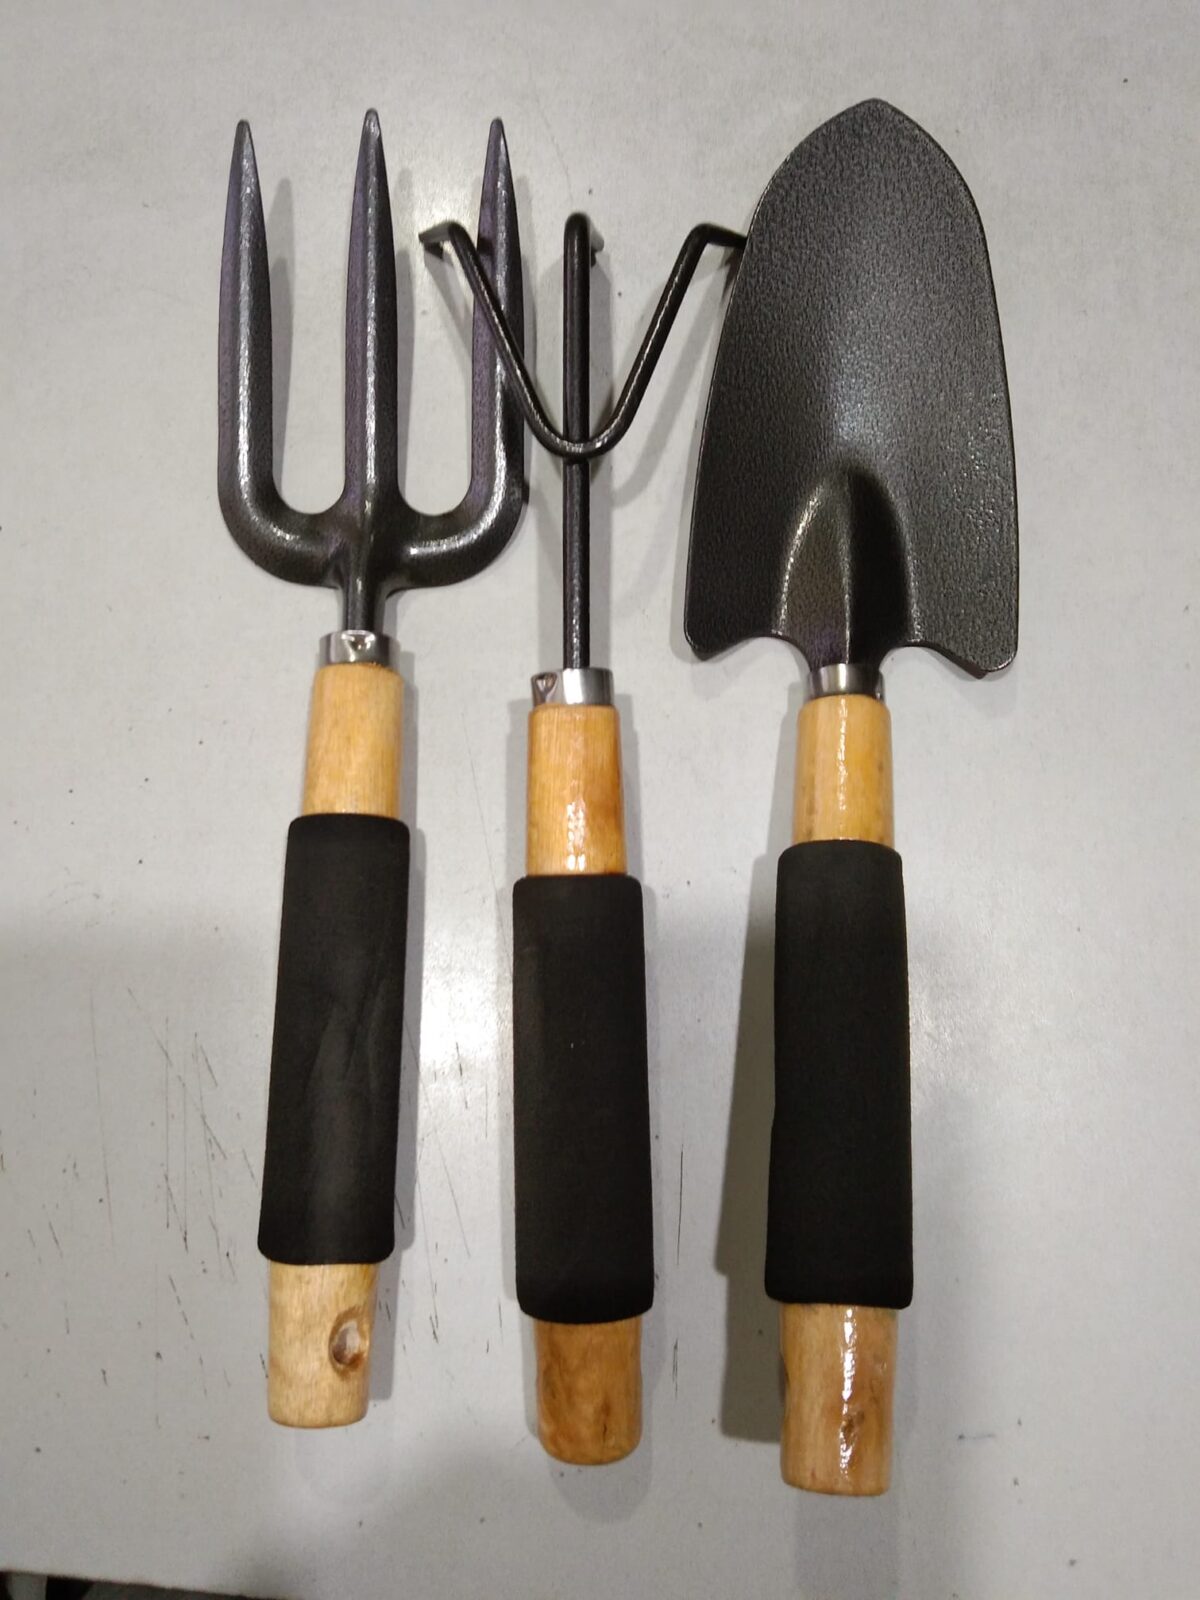 3 Kata Achra Gardening Tools Wooden